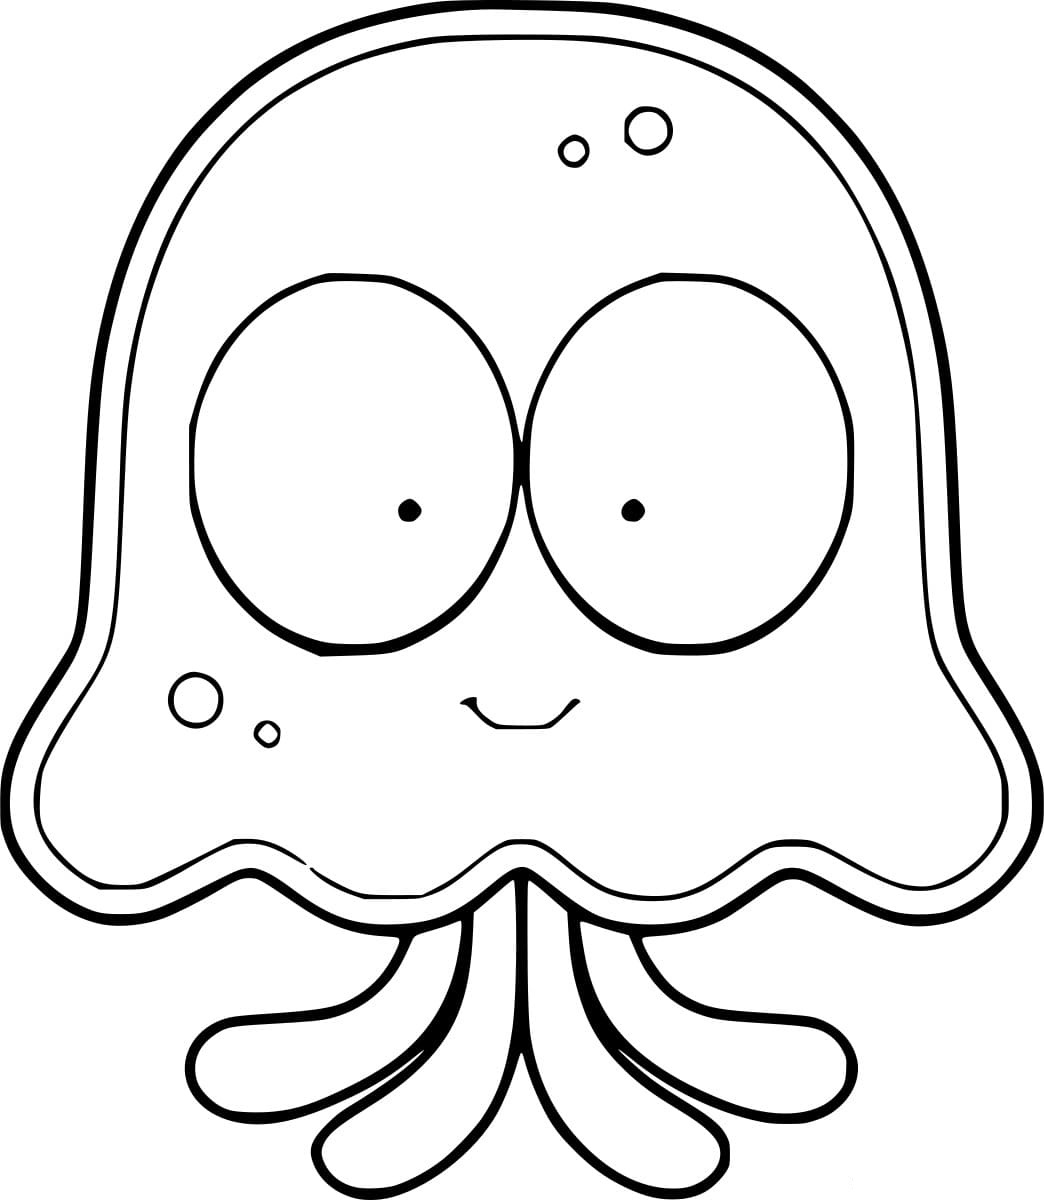 Cartoon Cute Jellyfish Image